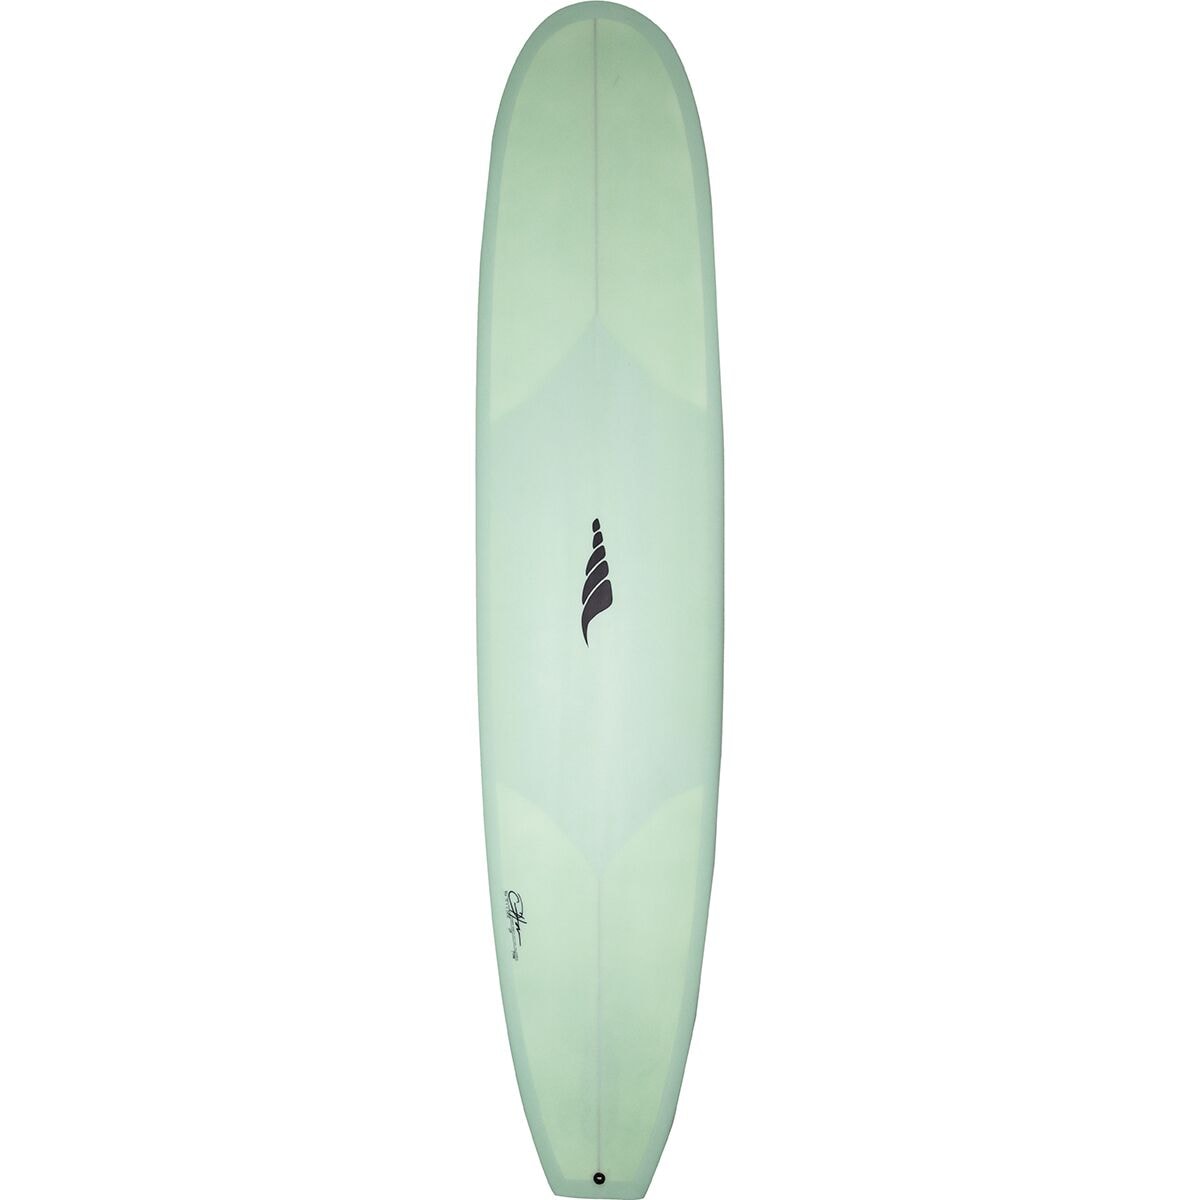 Solid Surfboards The Log Longboard Surfboard